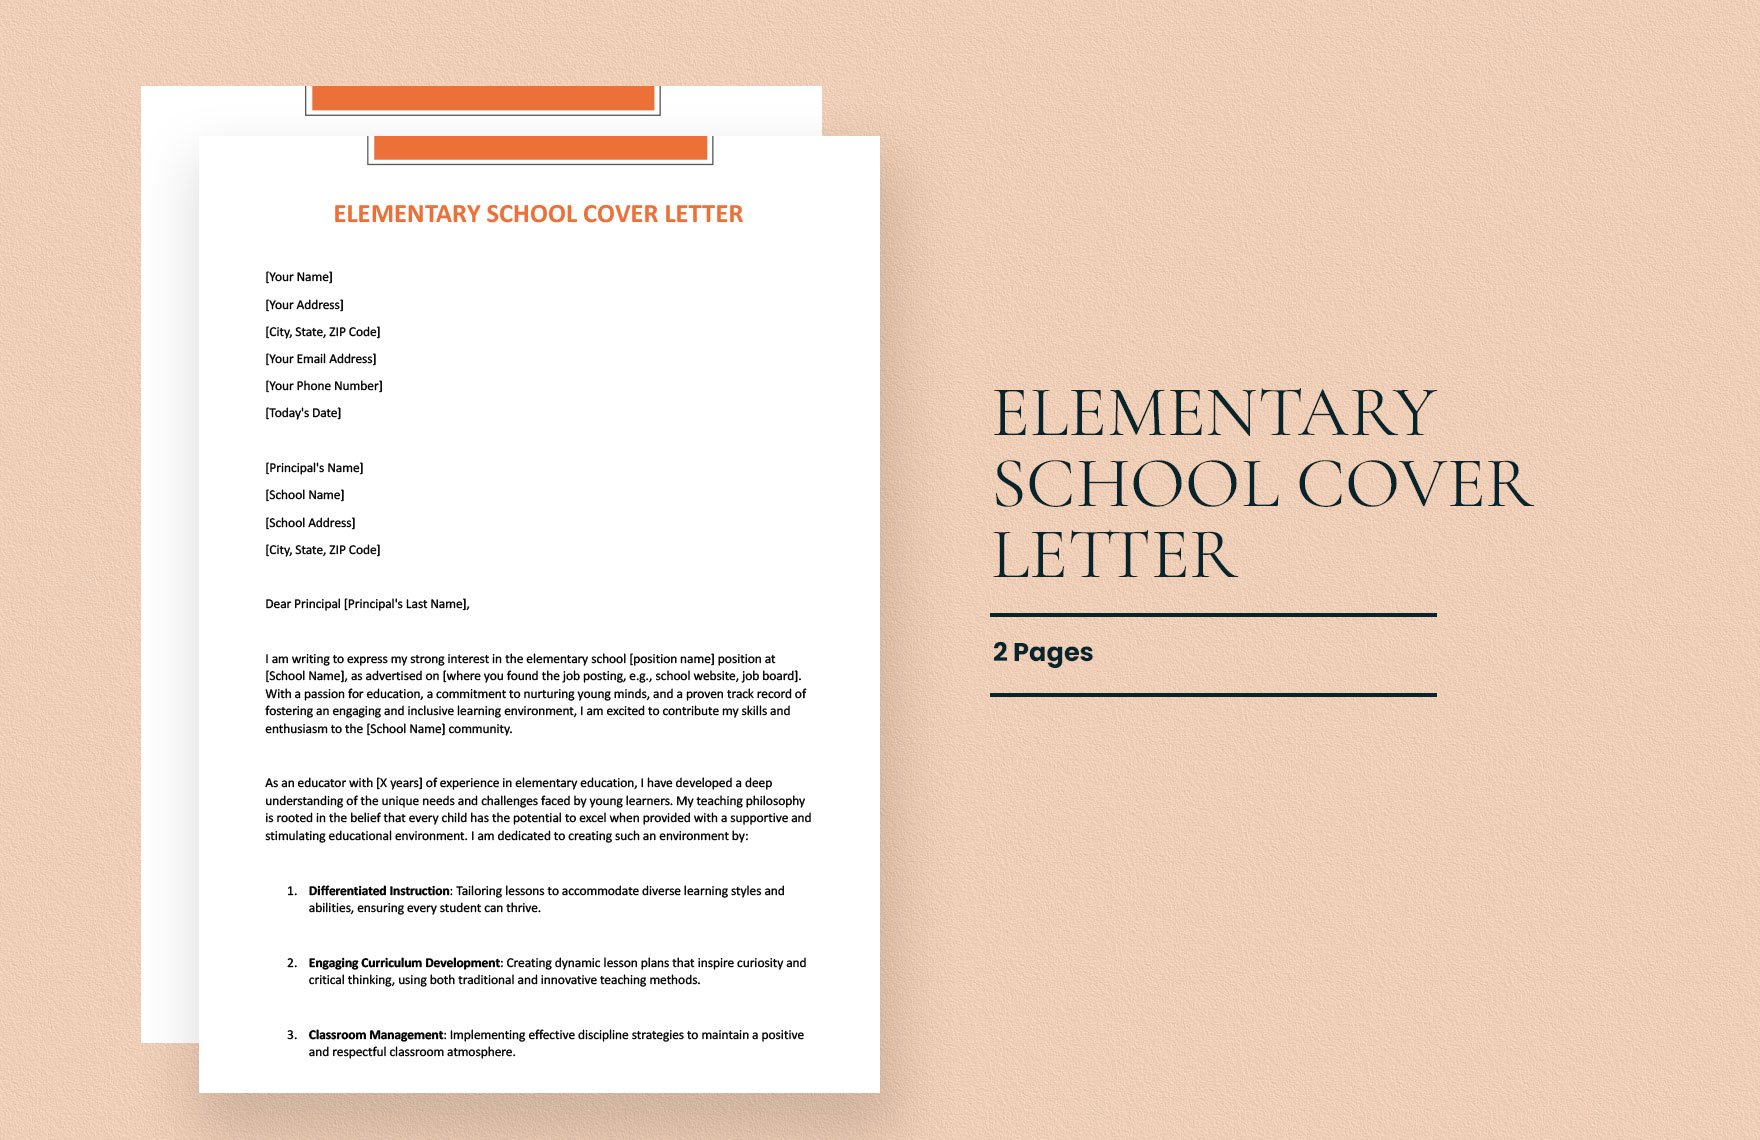 Elementary School Cover Letter